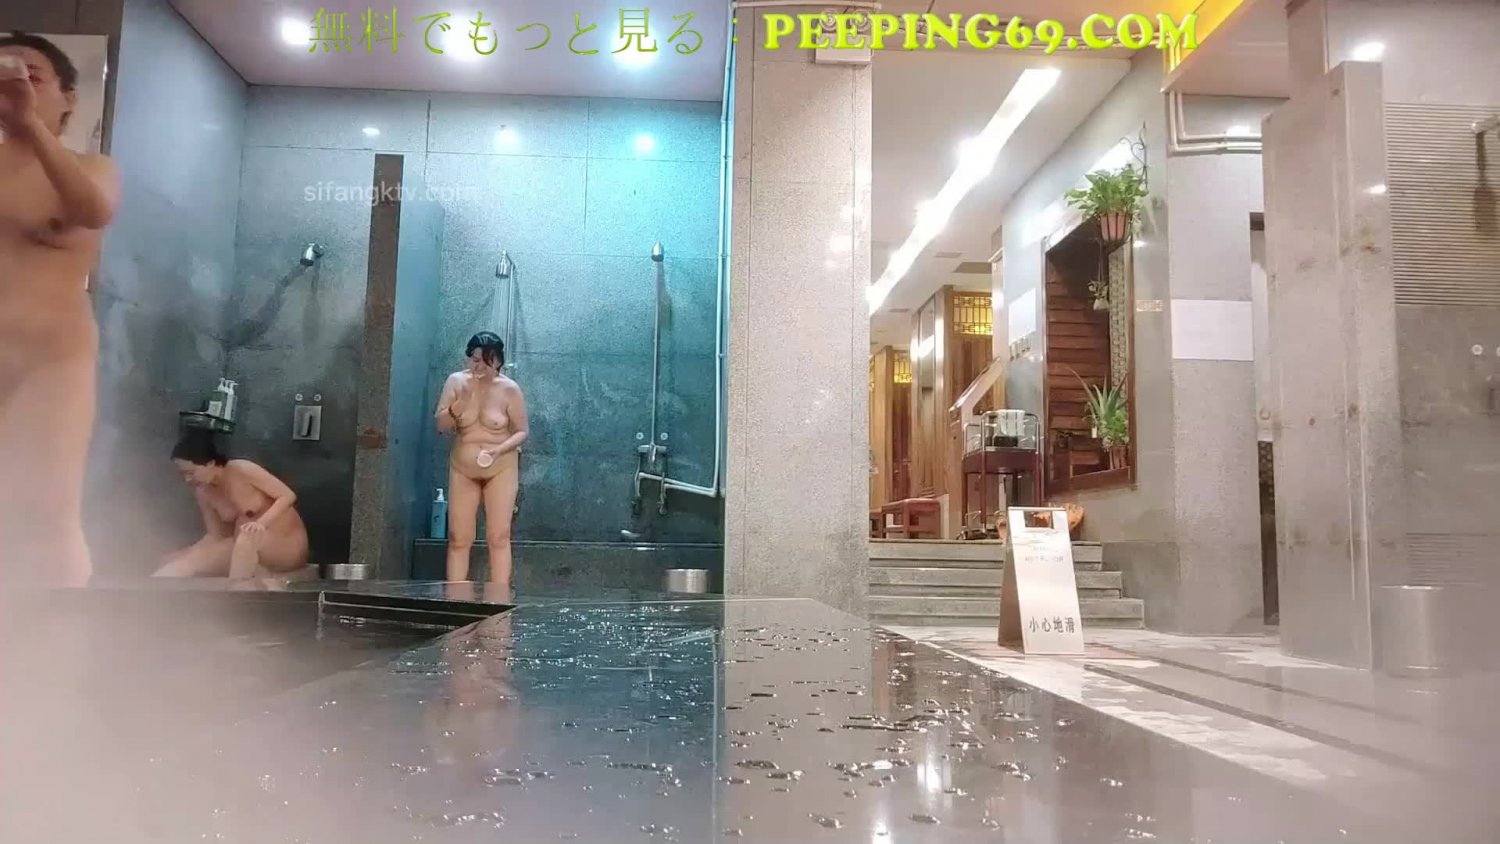 china peeping bathroom voyeur videos leaked - Porn image photo